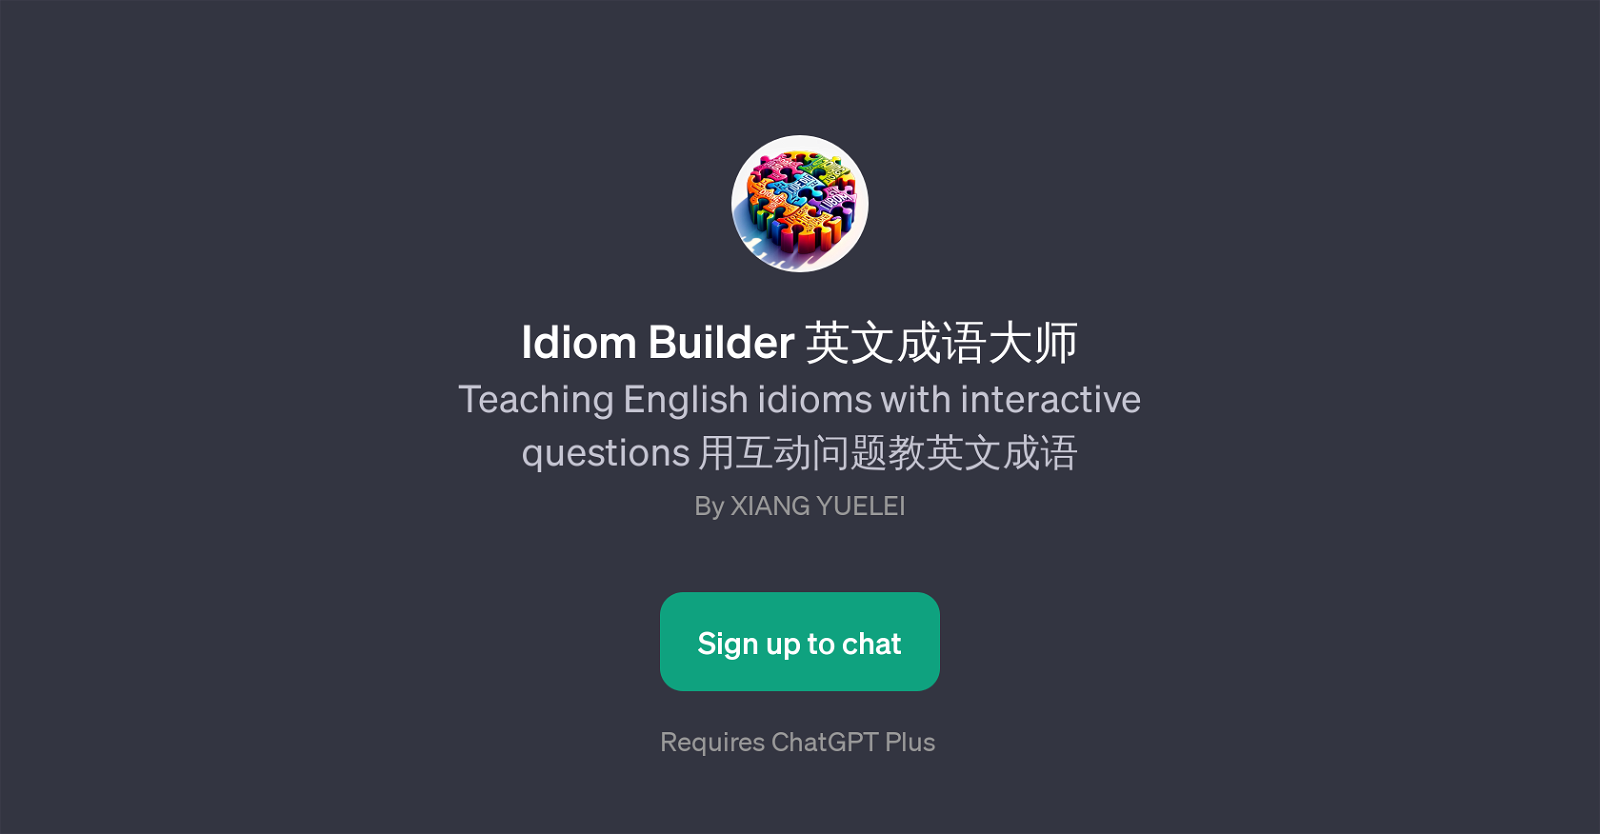 Idiom Builder website